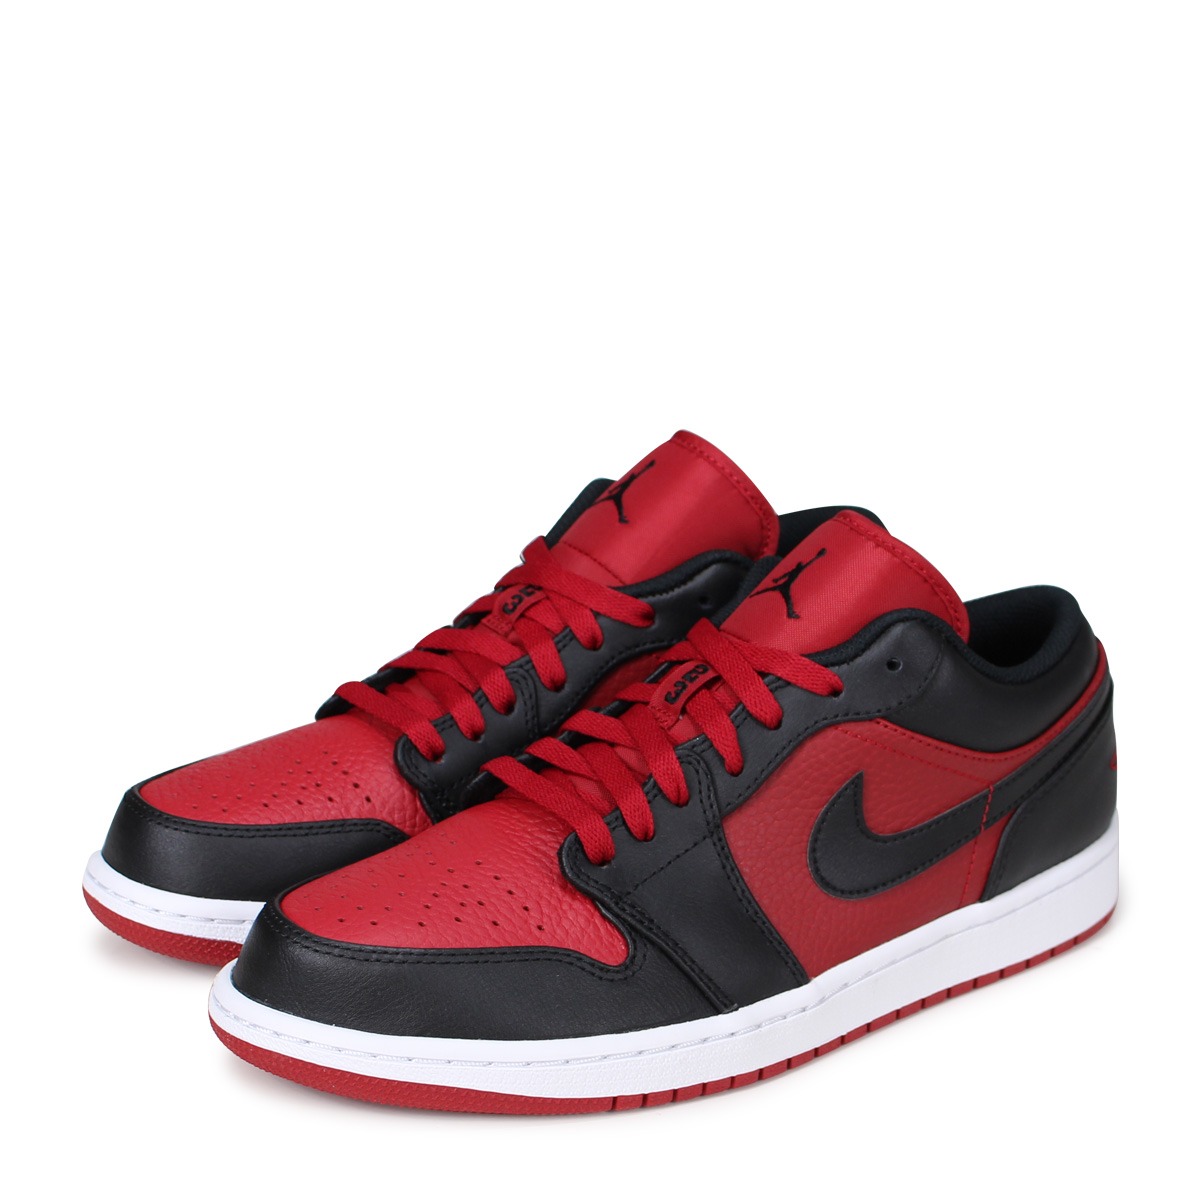 Найк 1 лоу. Nike Jordan 1 Low. Nike Air Jordan 1 Low. Nike Air Jordan 1 Low Red. Nike Air Jordan 1 Low черные.